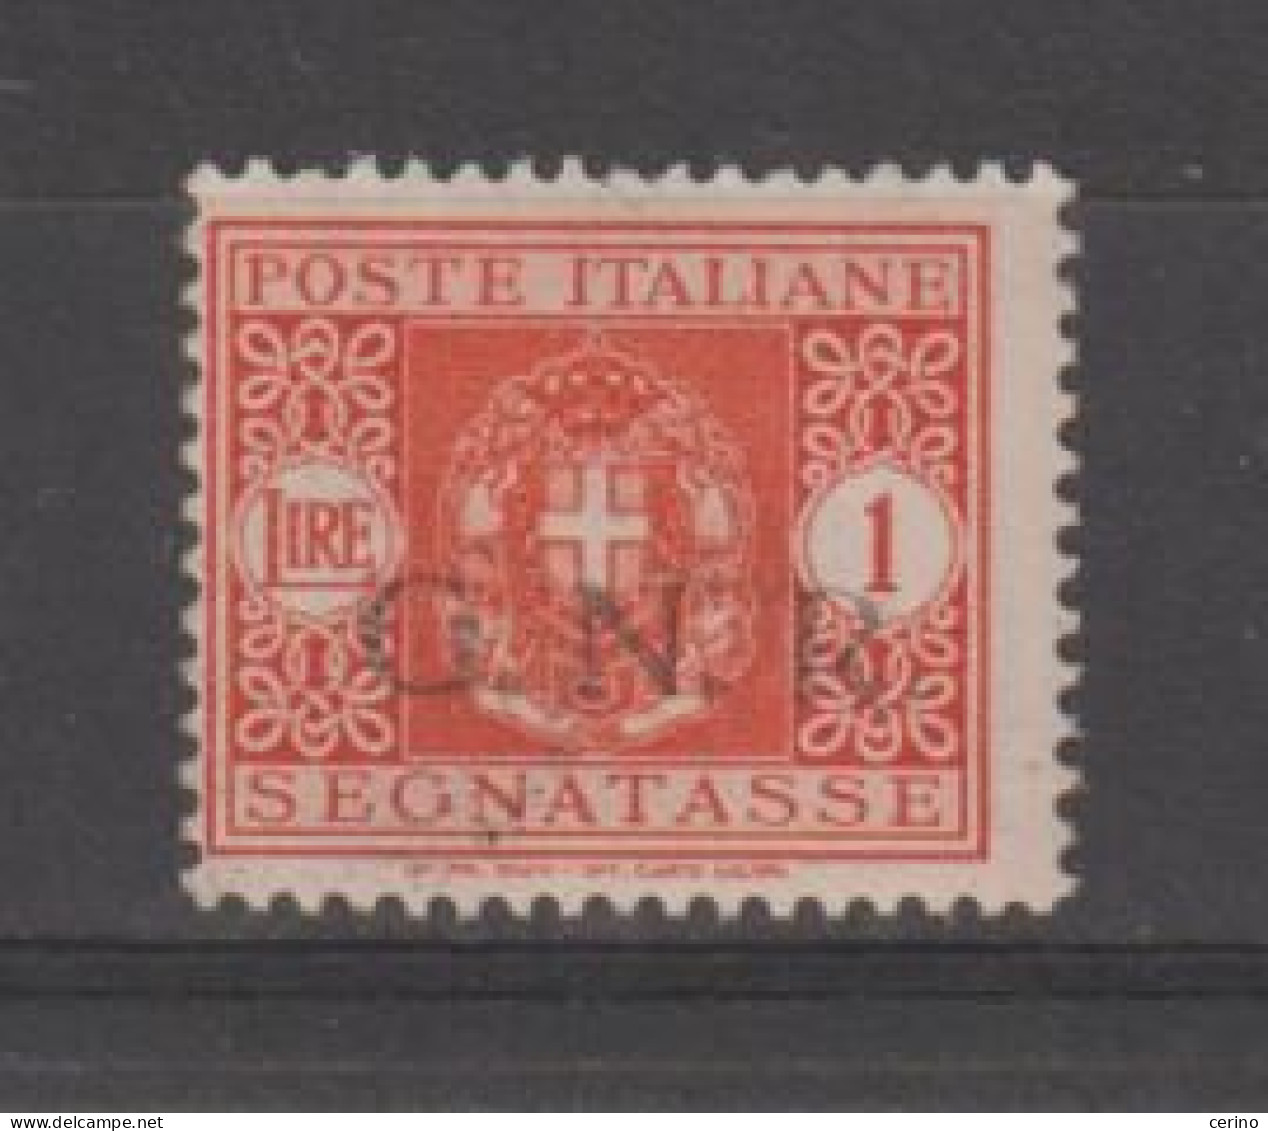 R.S.I.:  1944  TASSE  G.N.R. -  £. 1  ARANCIO  N. -  SASS. 55 - Postage Due